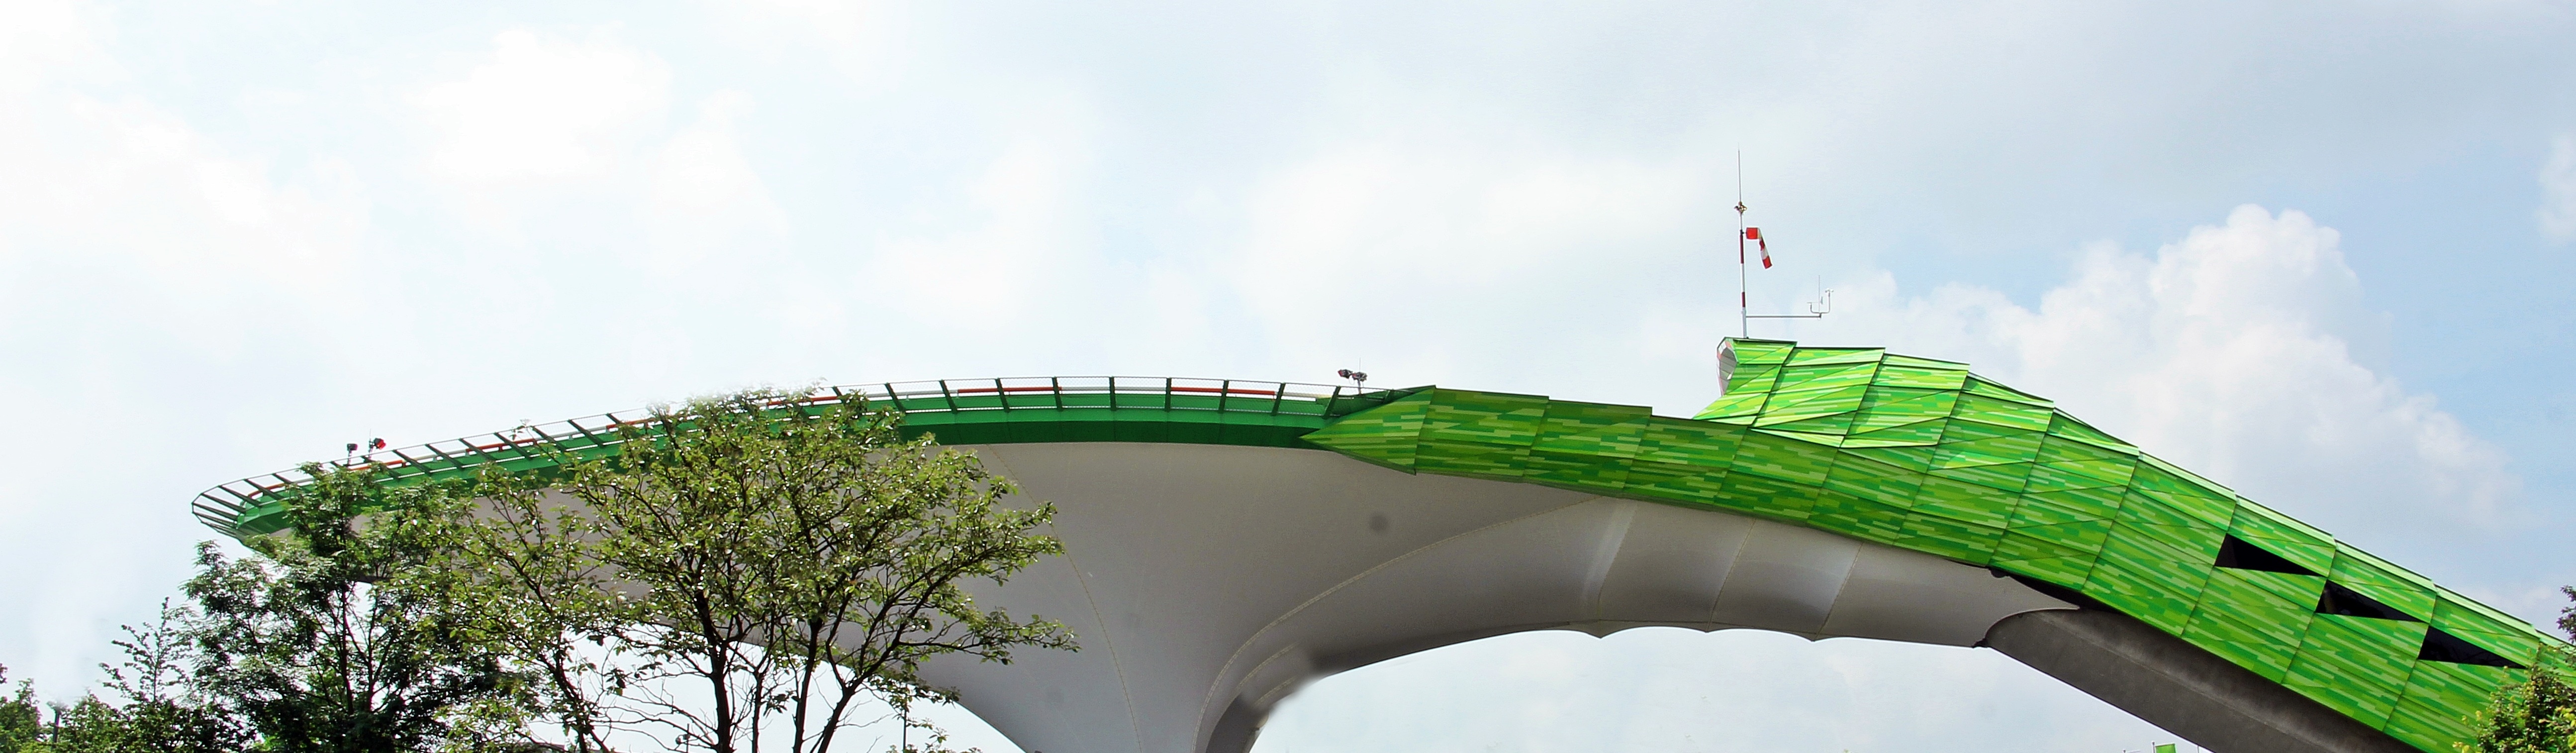 green and white landmark